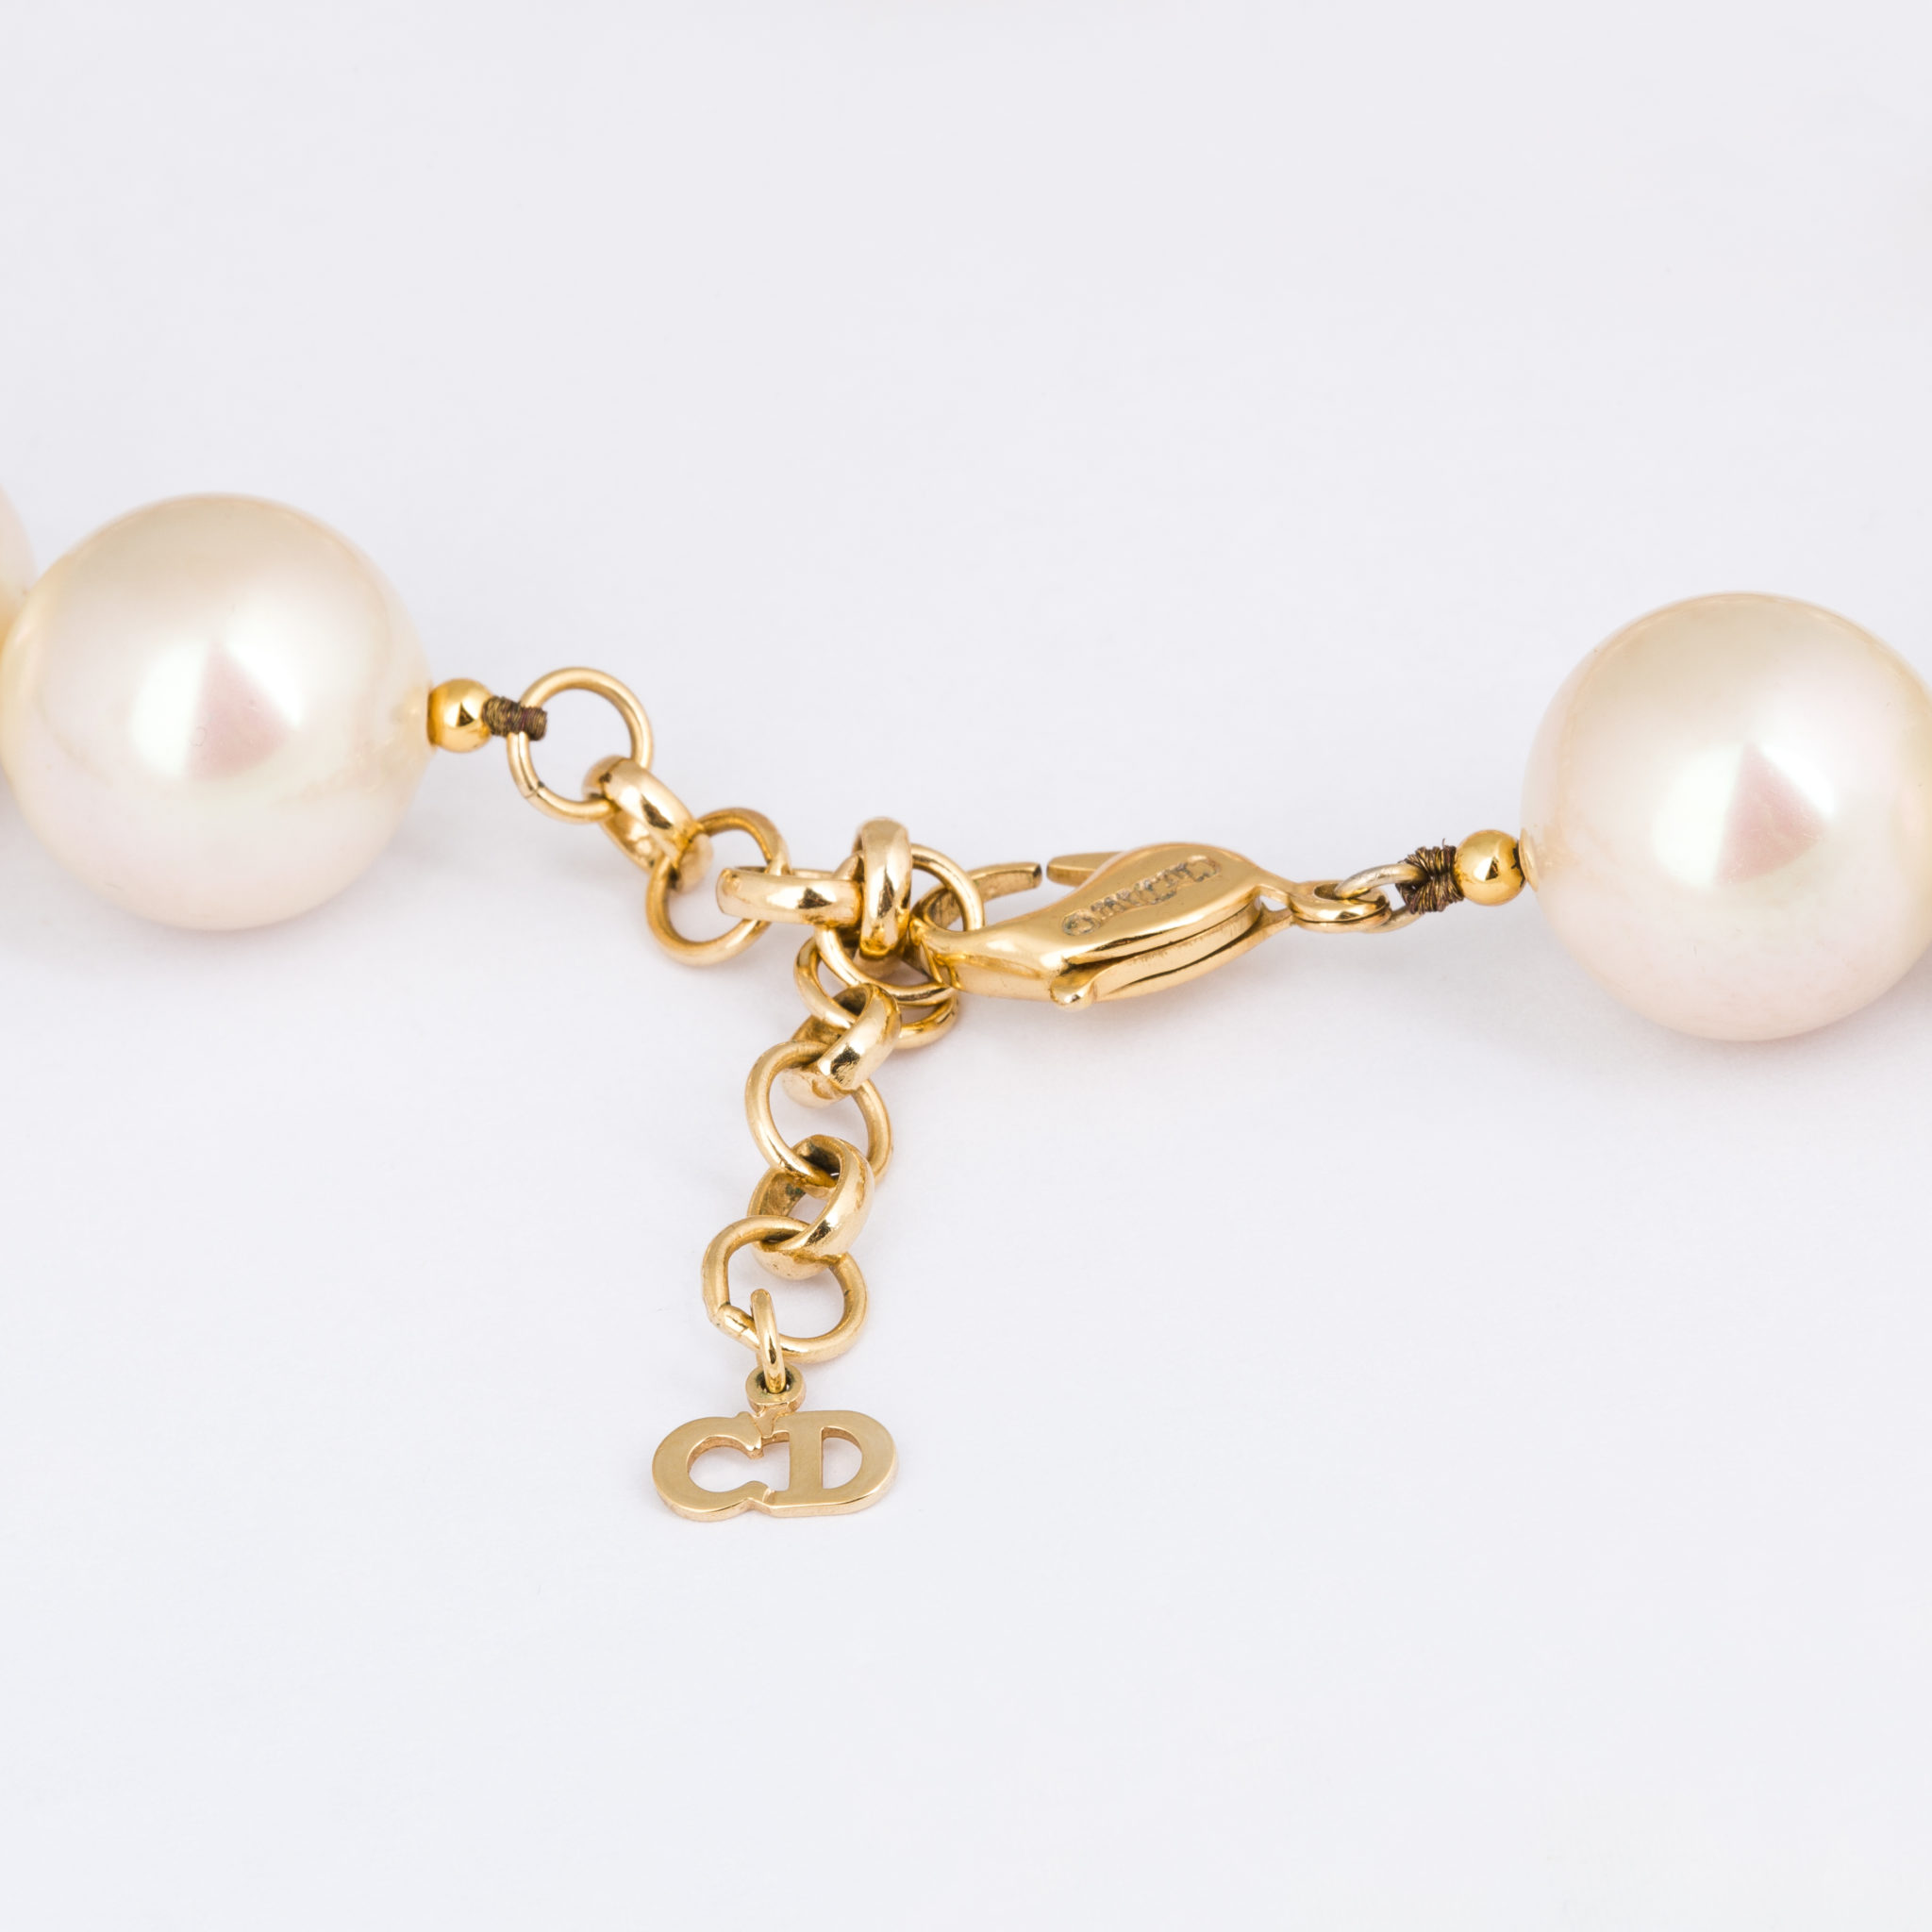 Christian Dior - Vintage oversized pearl necklace - 4element